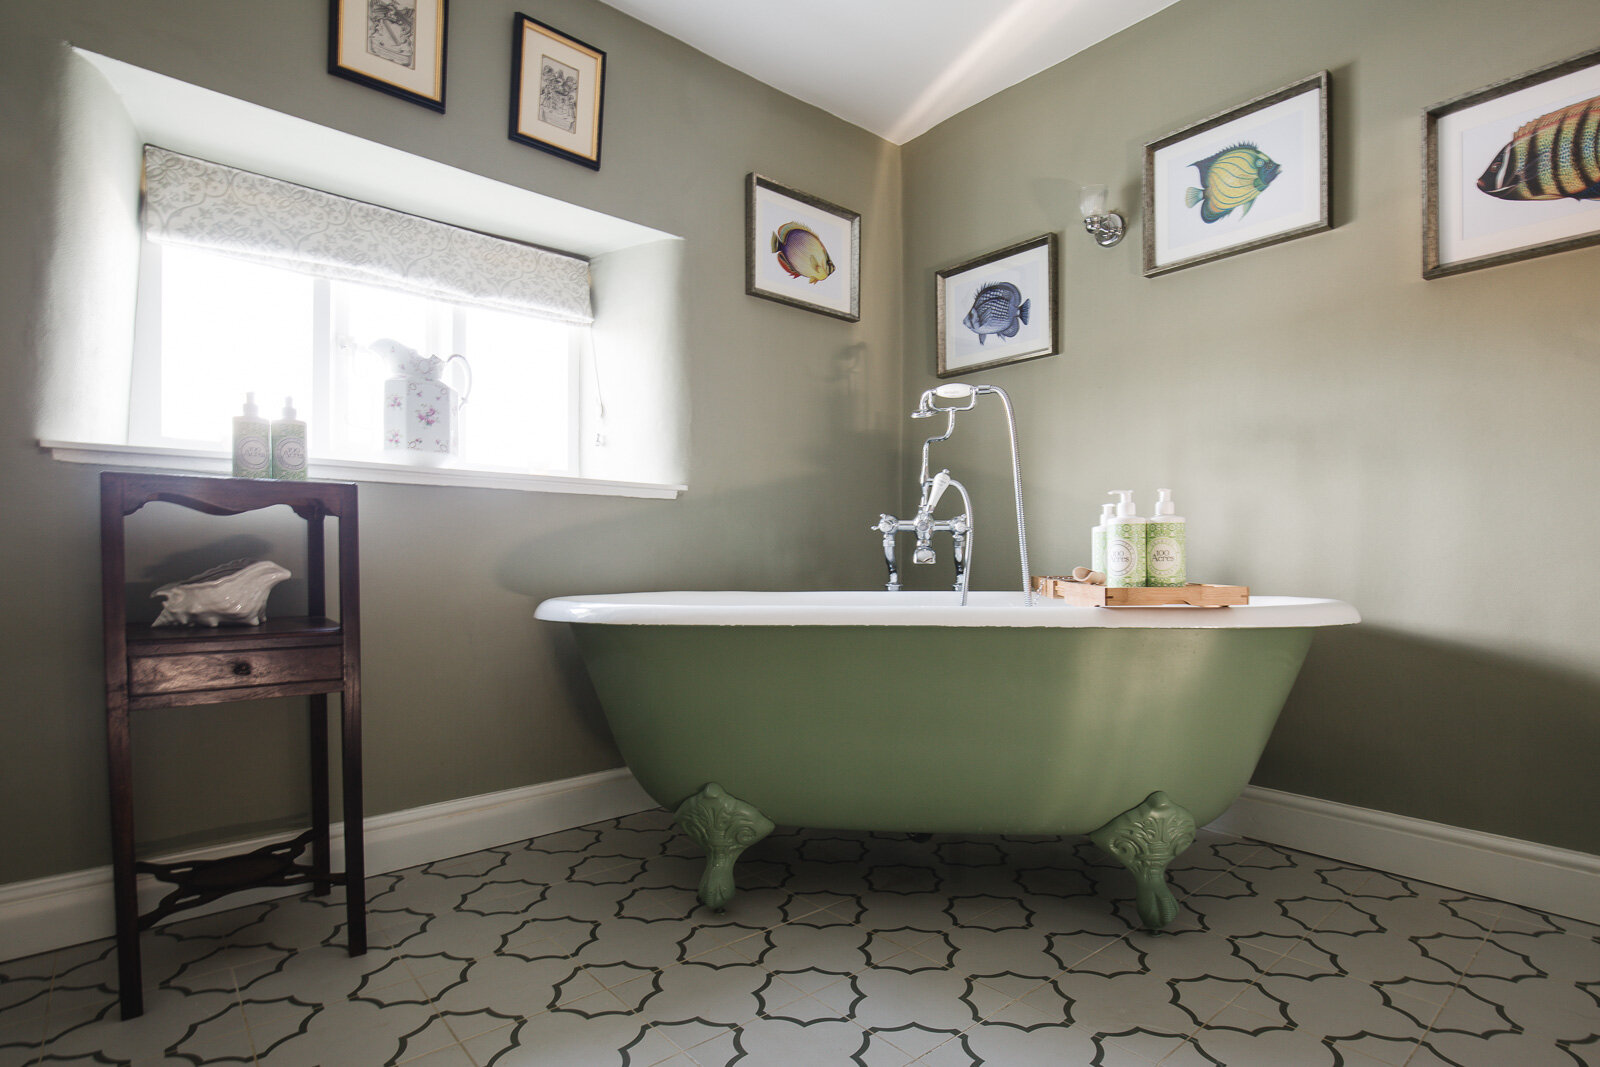 Cast iron bath interior photograph